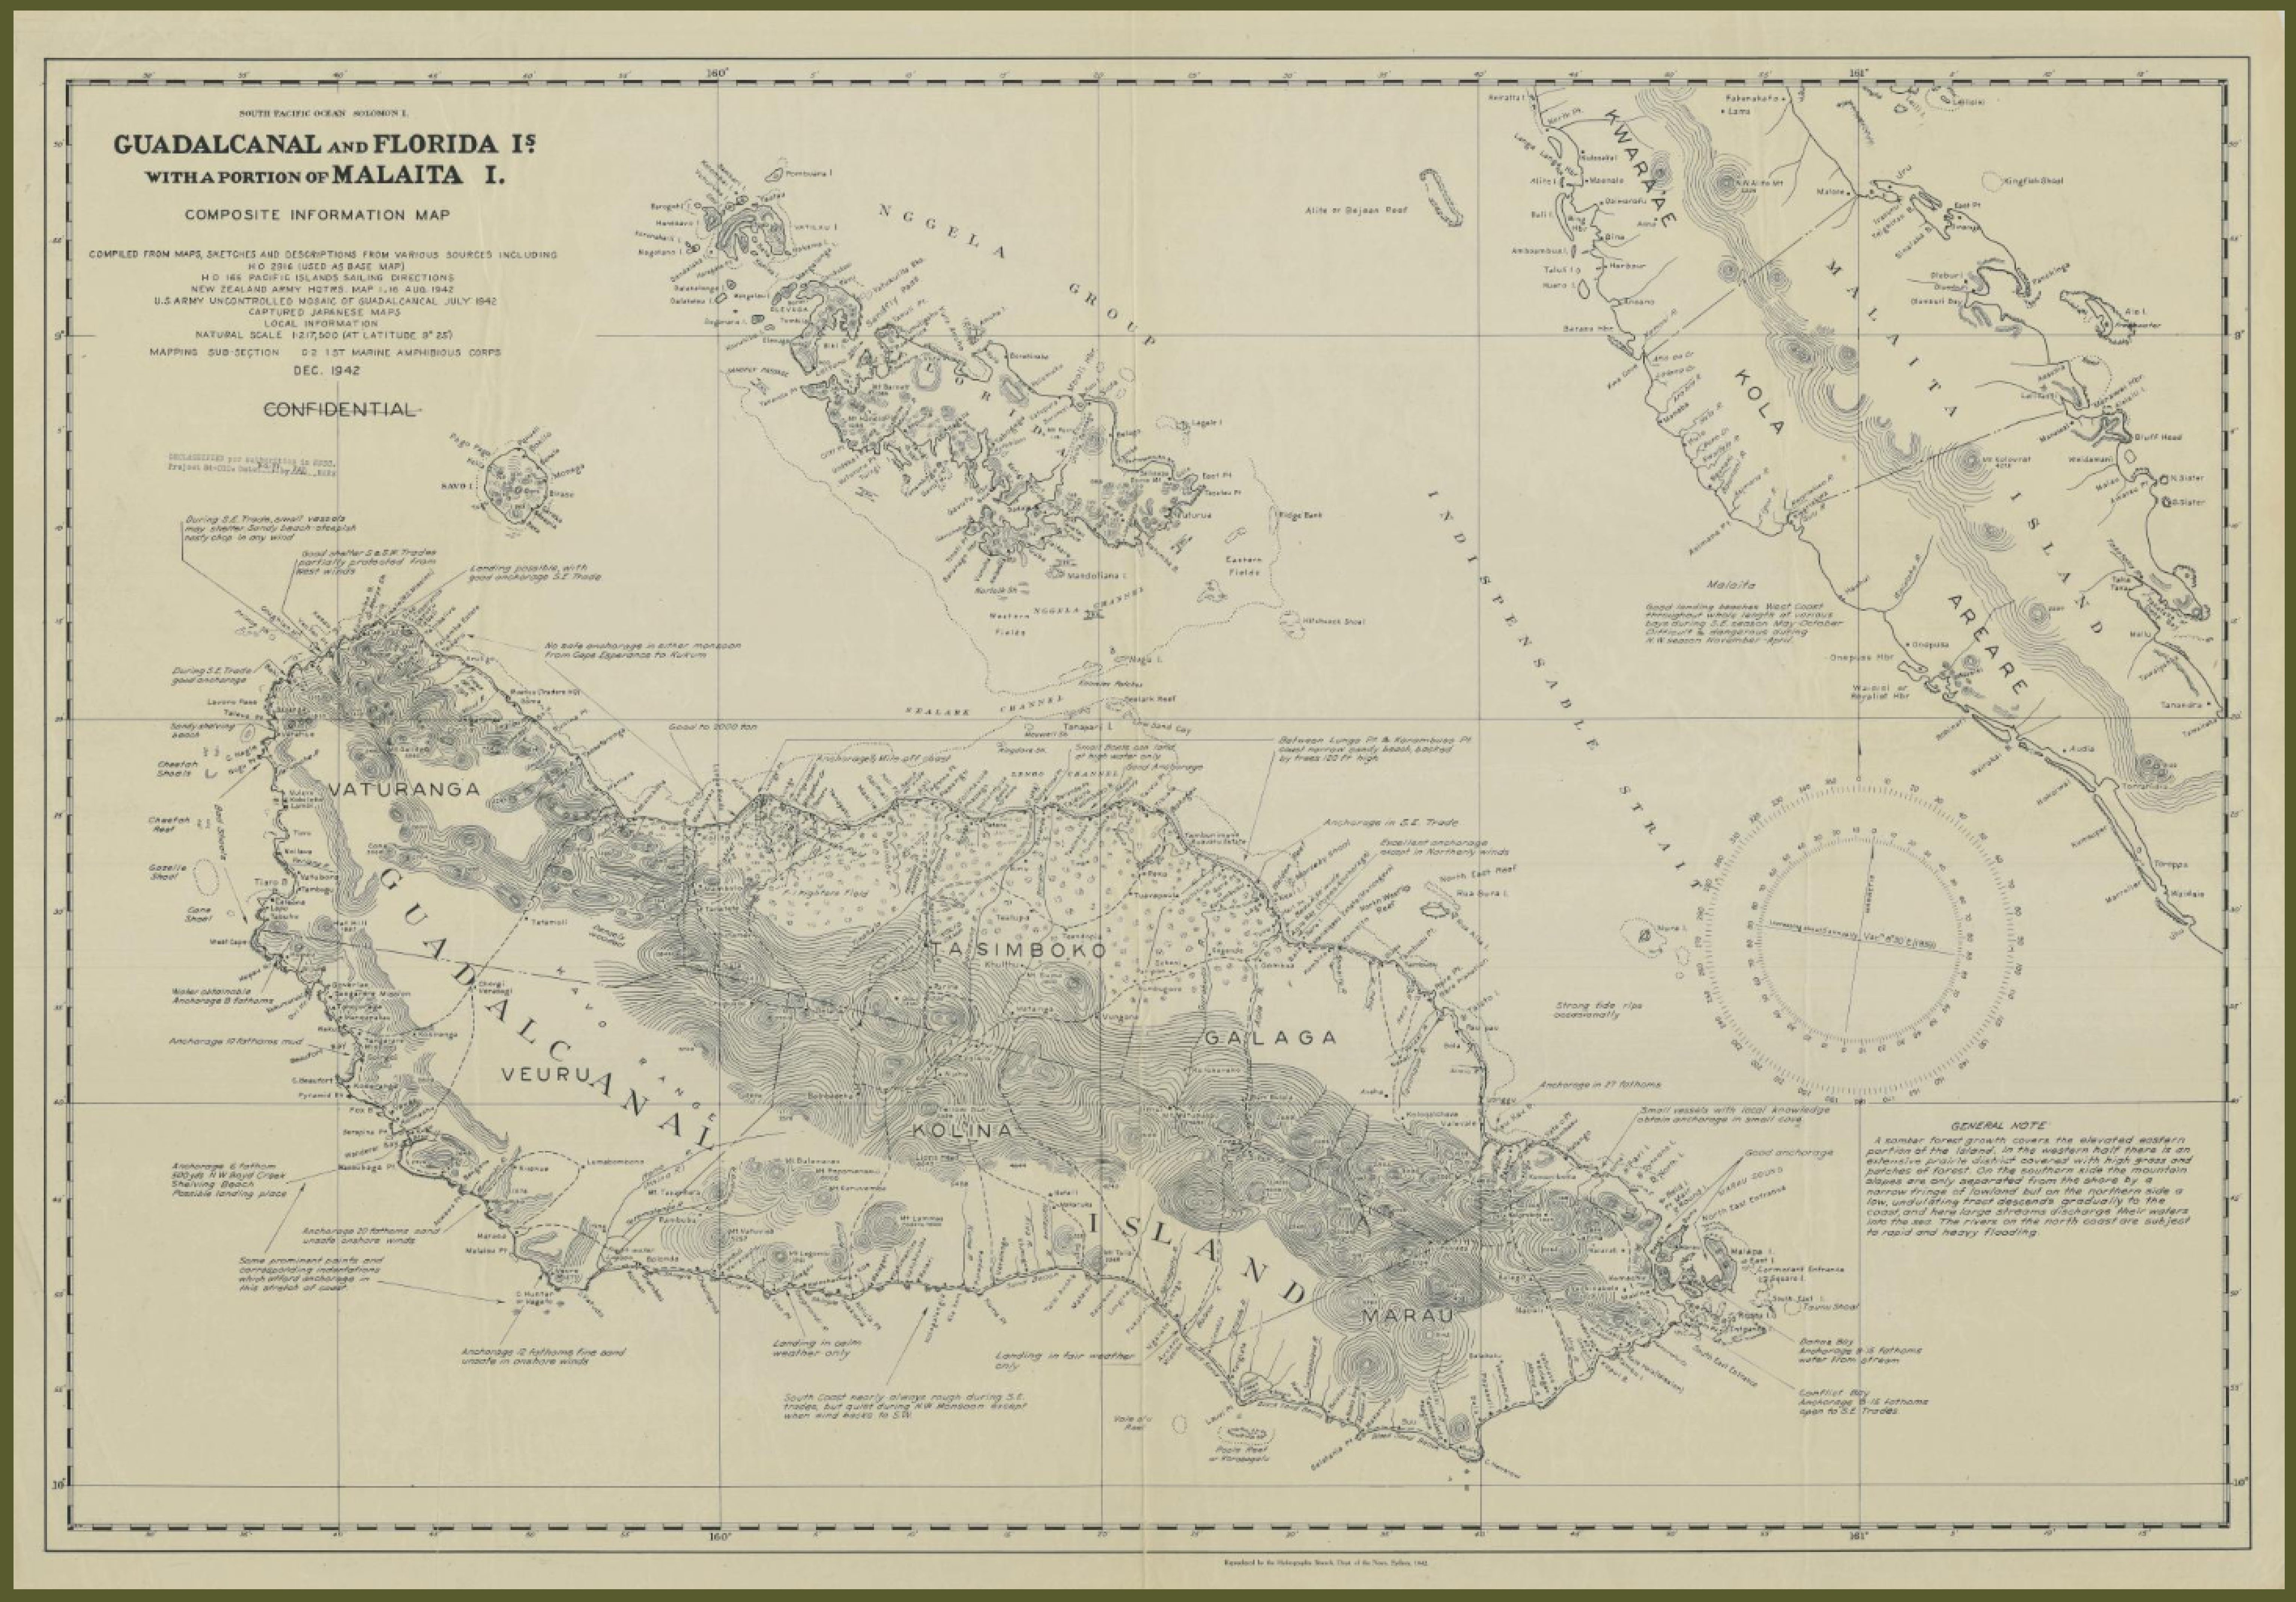 Guadalcanal and Florida map december 1942